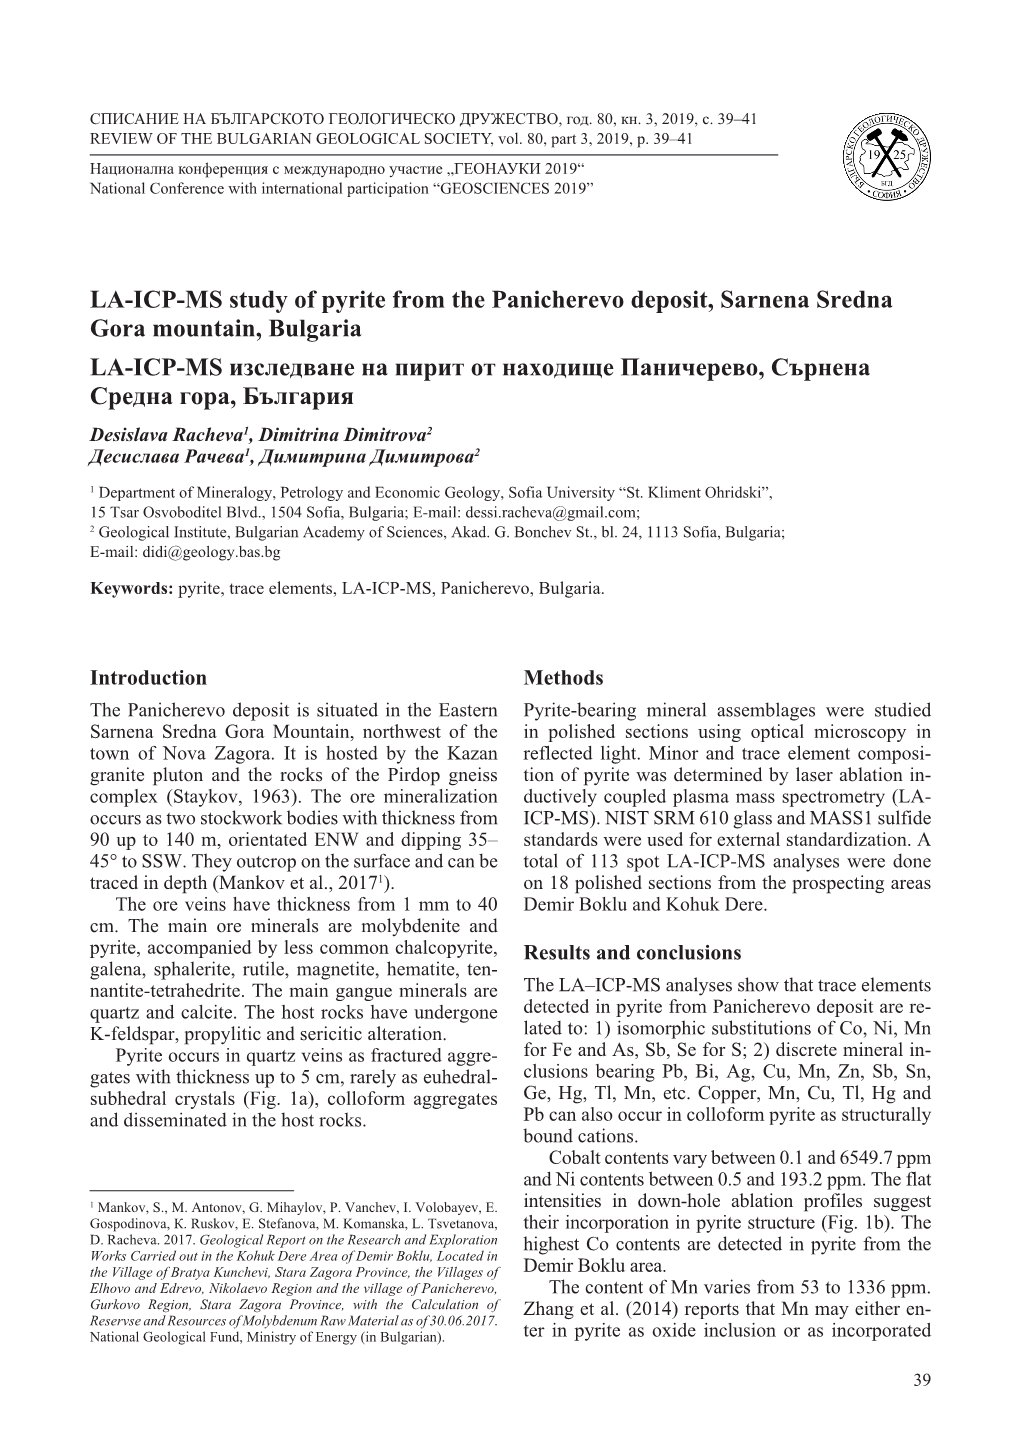 LA-ICP-MS Study of Pyrite from the Panicherevo Deposit, Sarnena